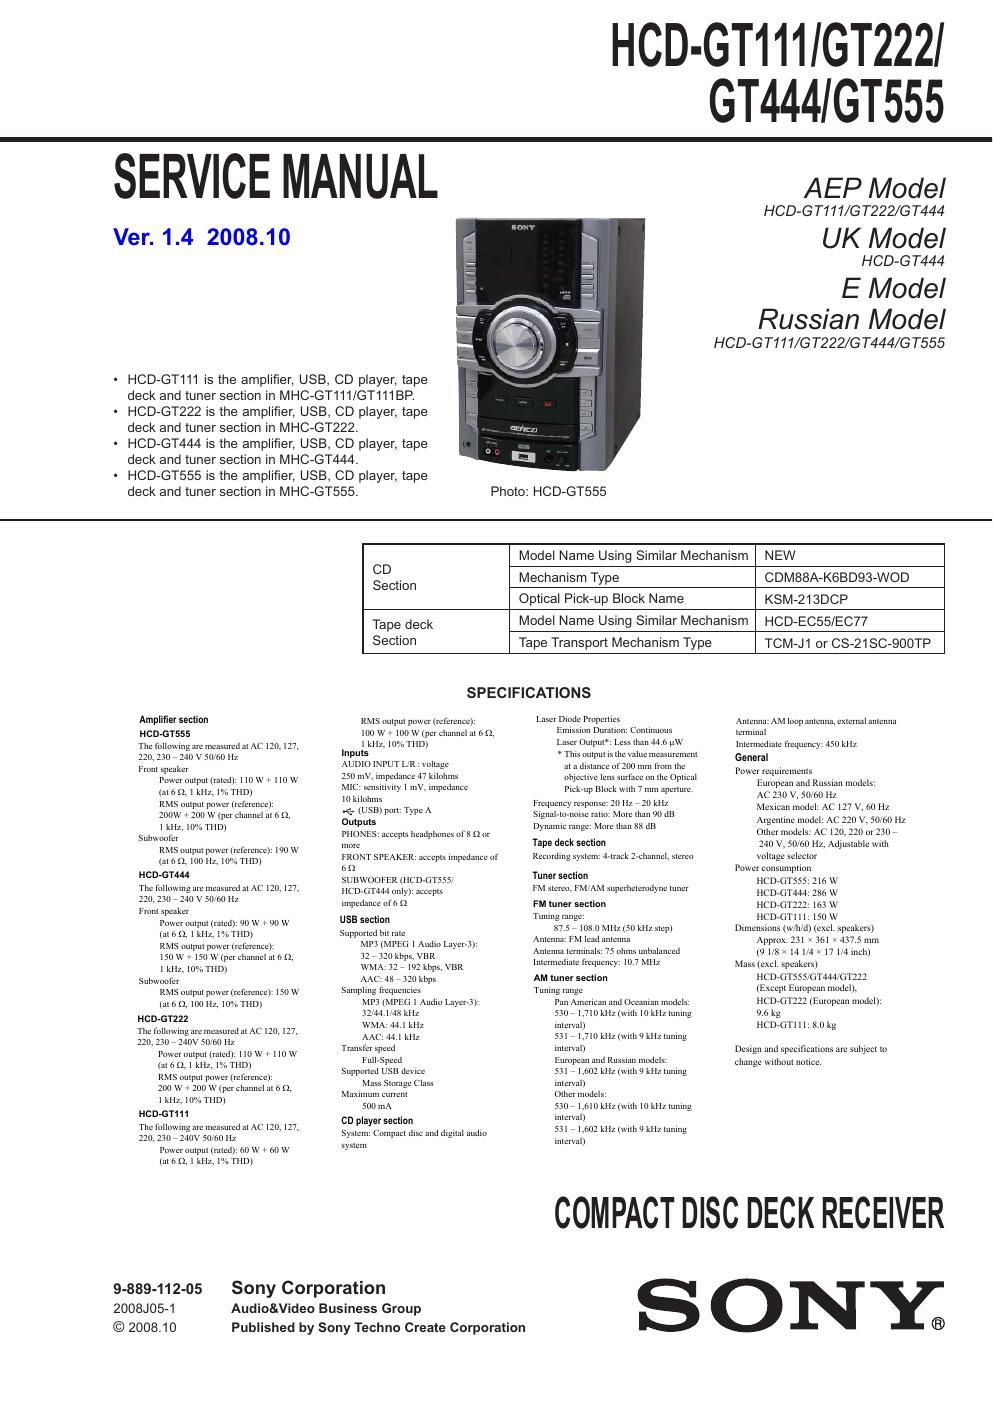 sony hcd gt 444 service manual